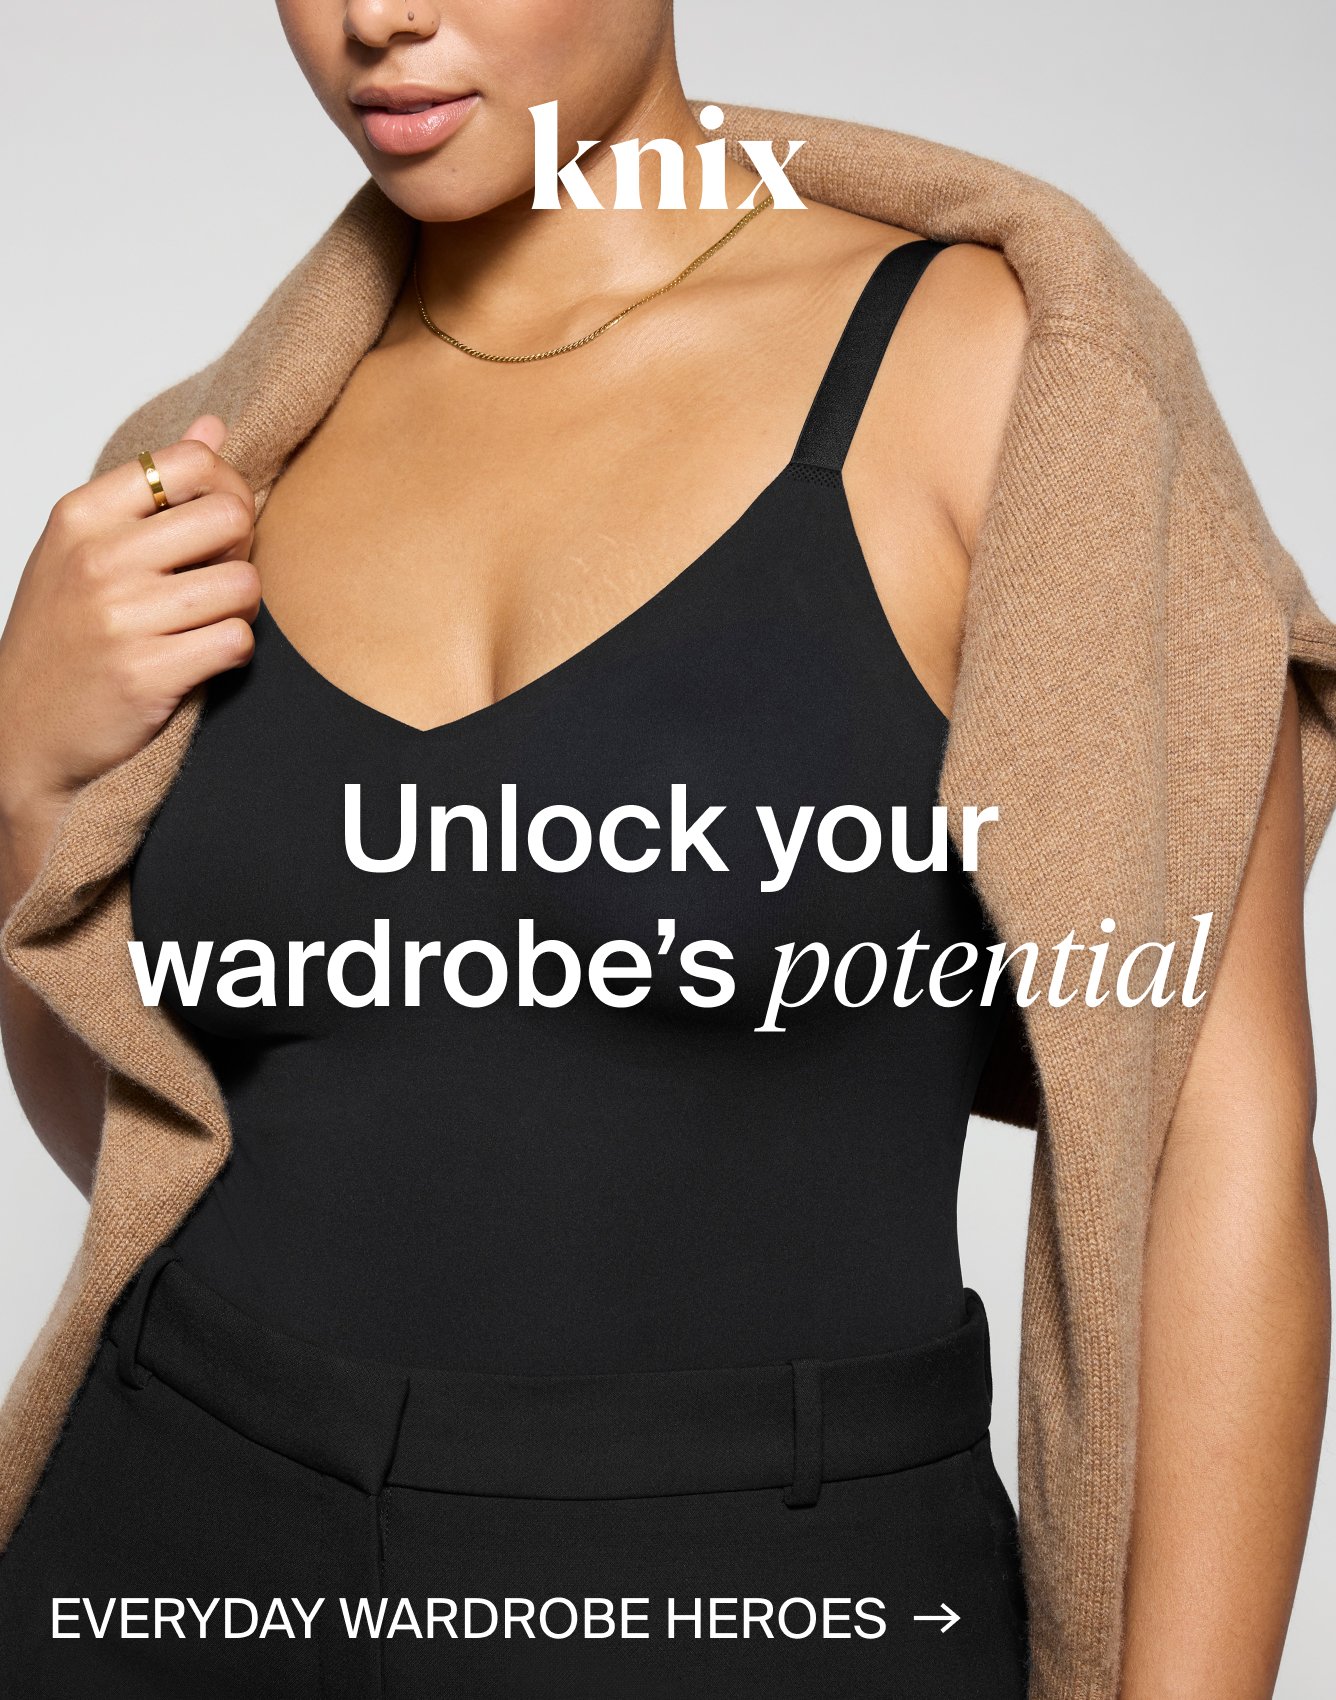 Knix: Unlock your wardrobe's potential. Everyday wardrobe heroes.